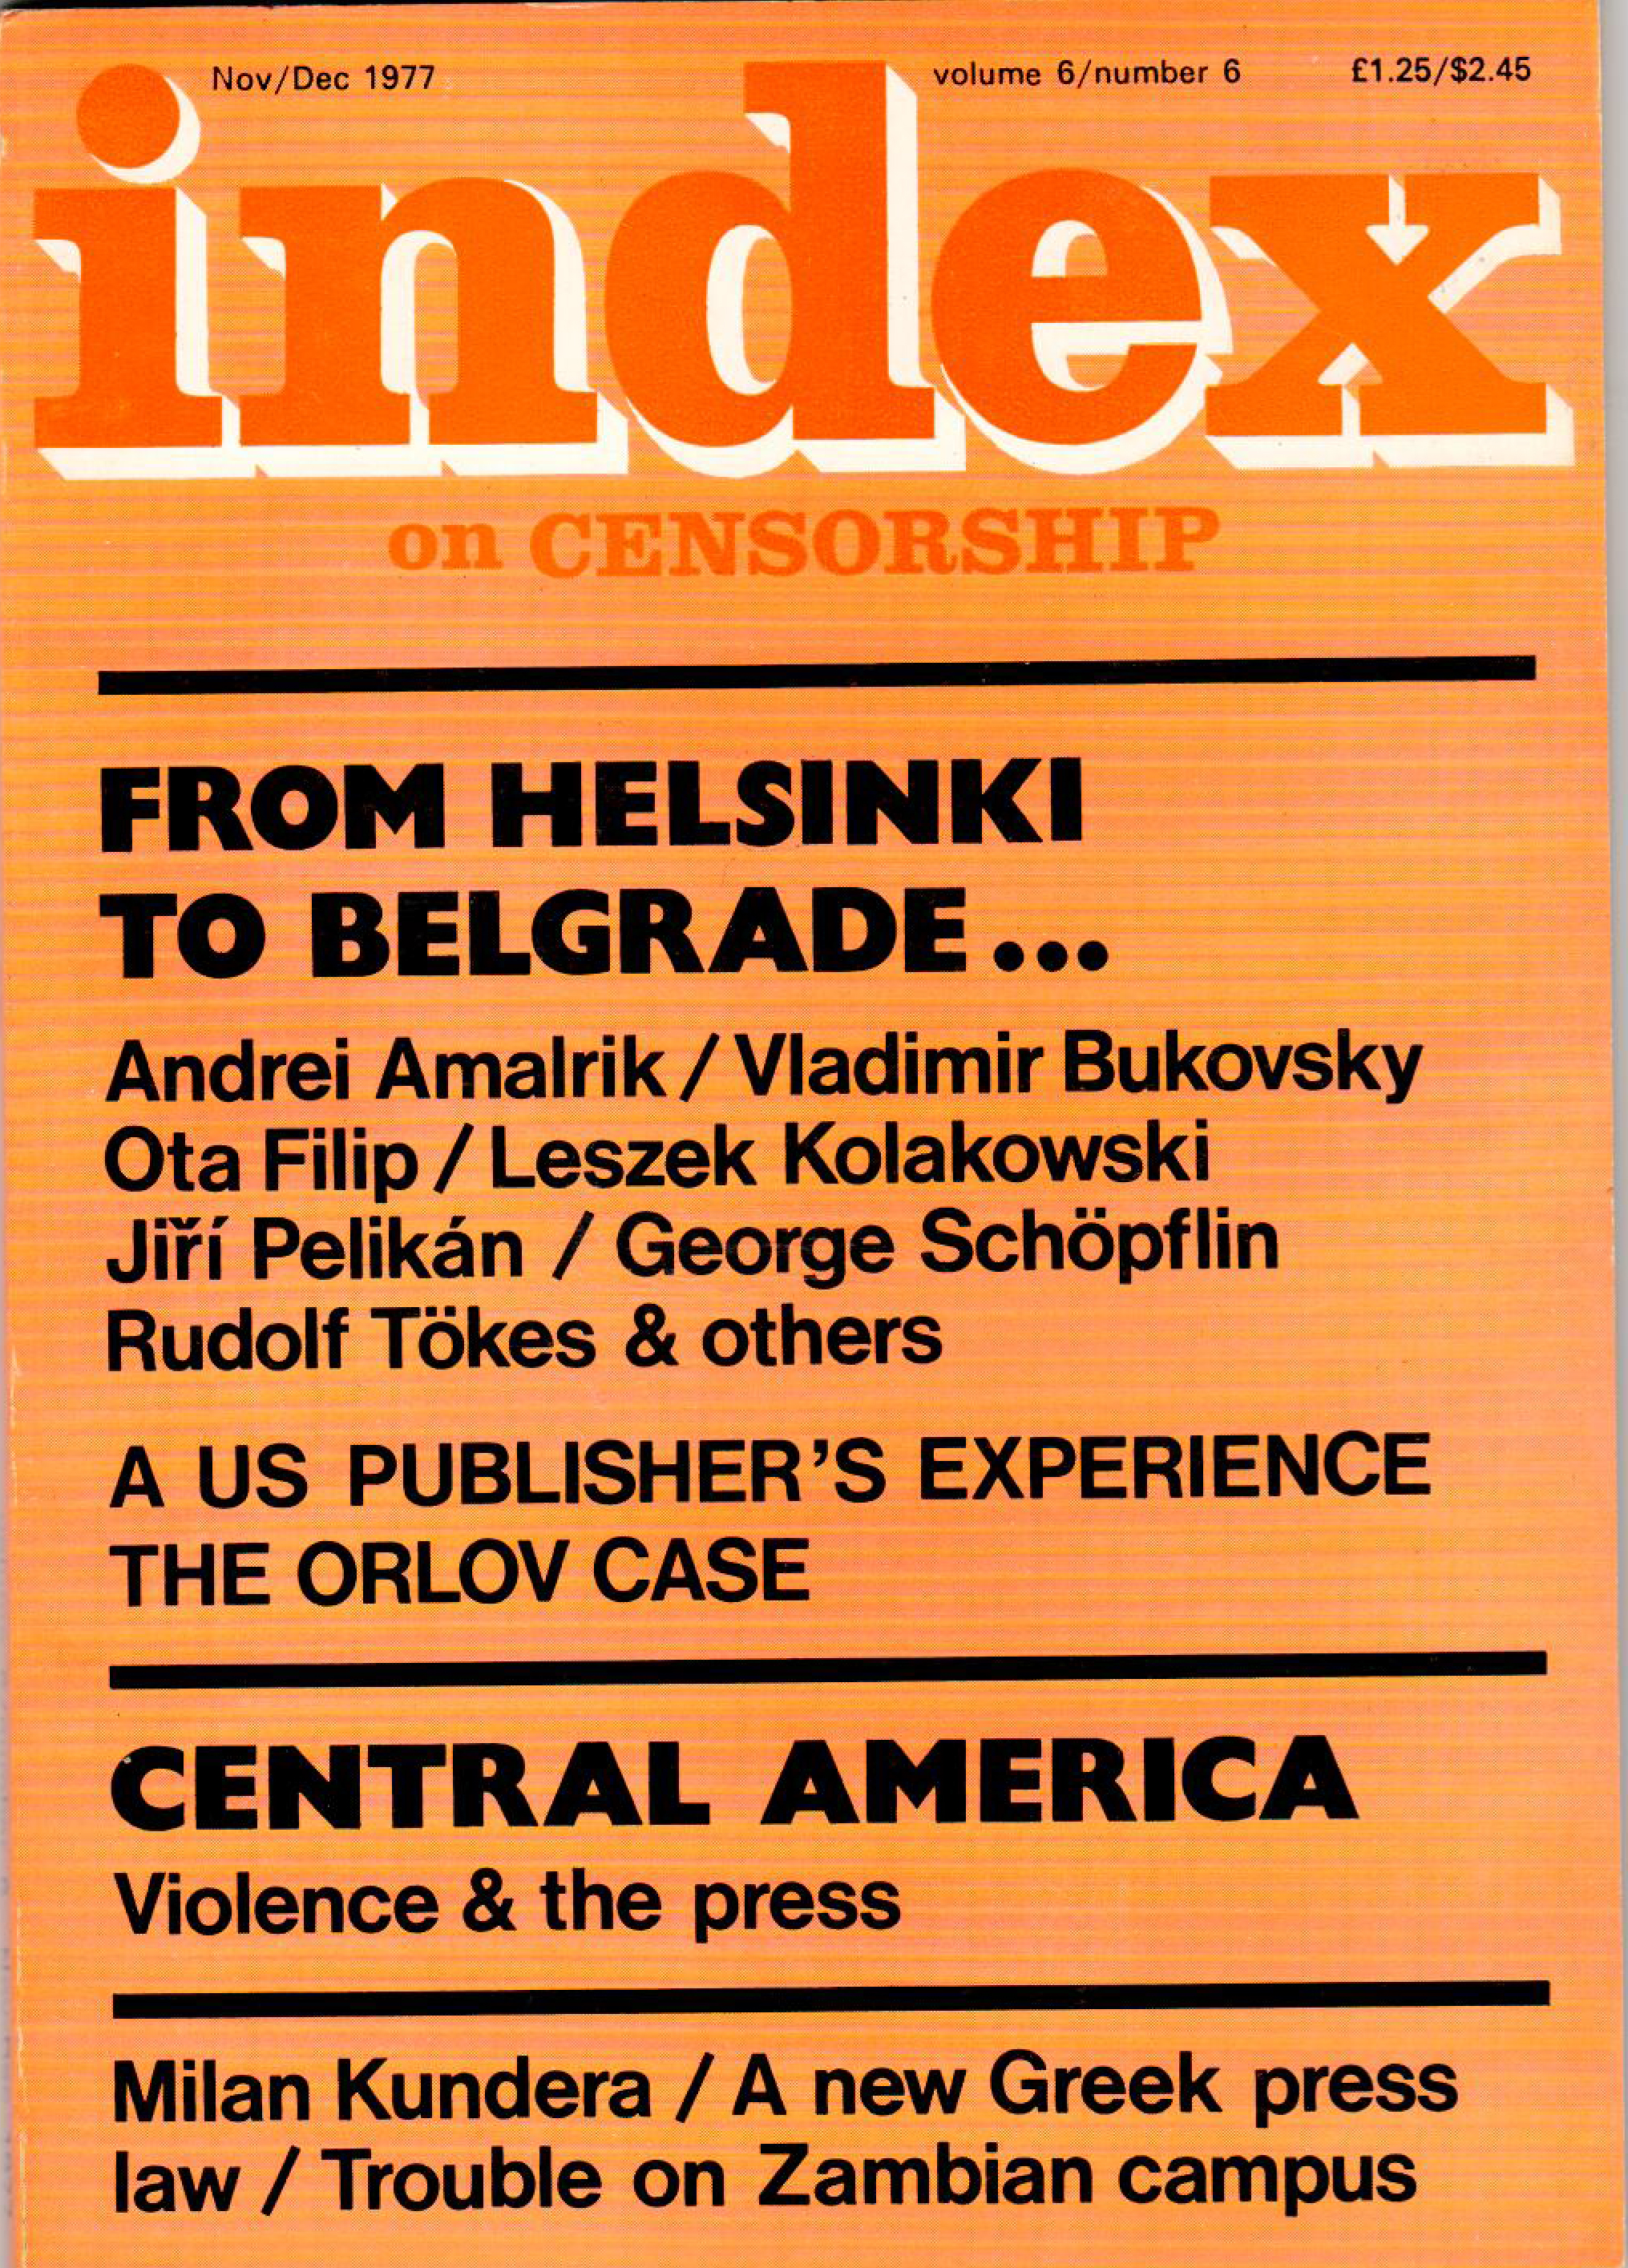 From Helsinki to Belgrade..., the November 1977 issue of Index on Censorship magazine